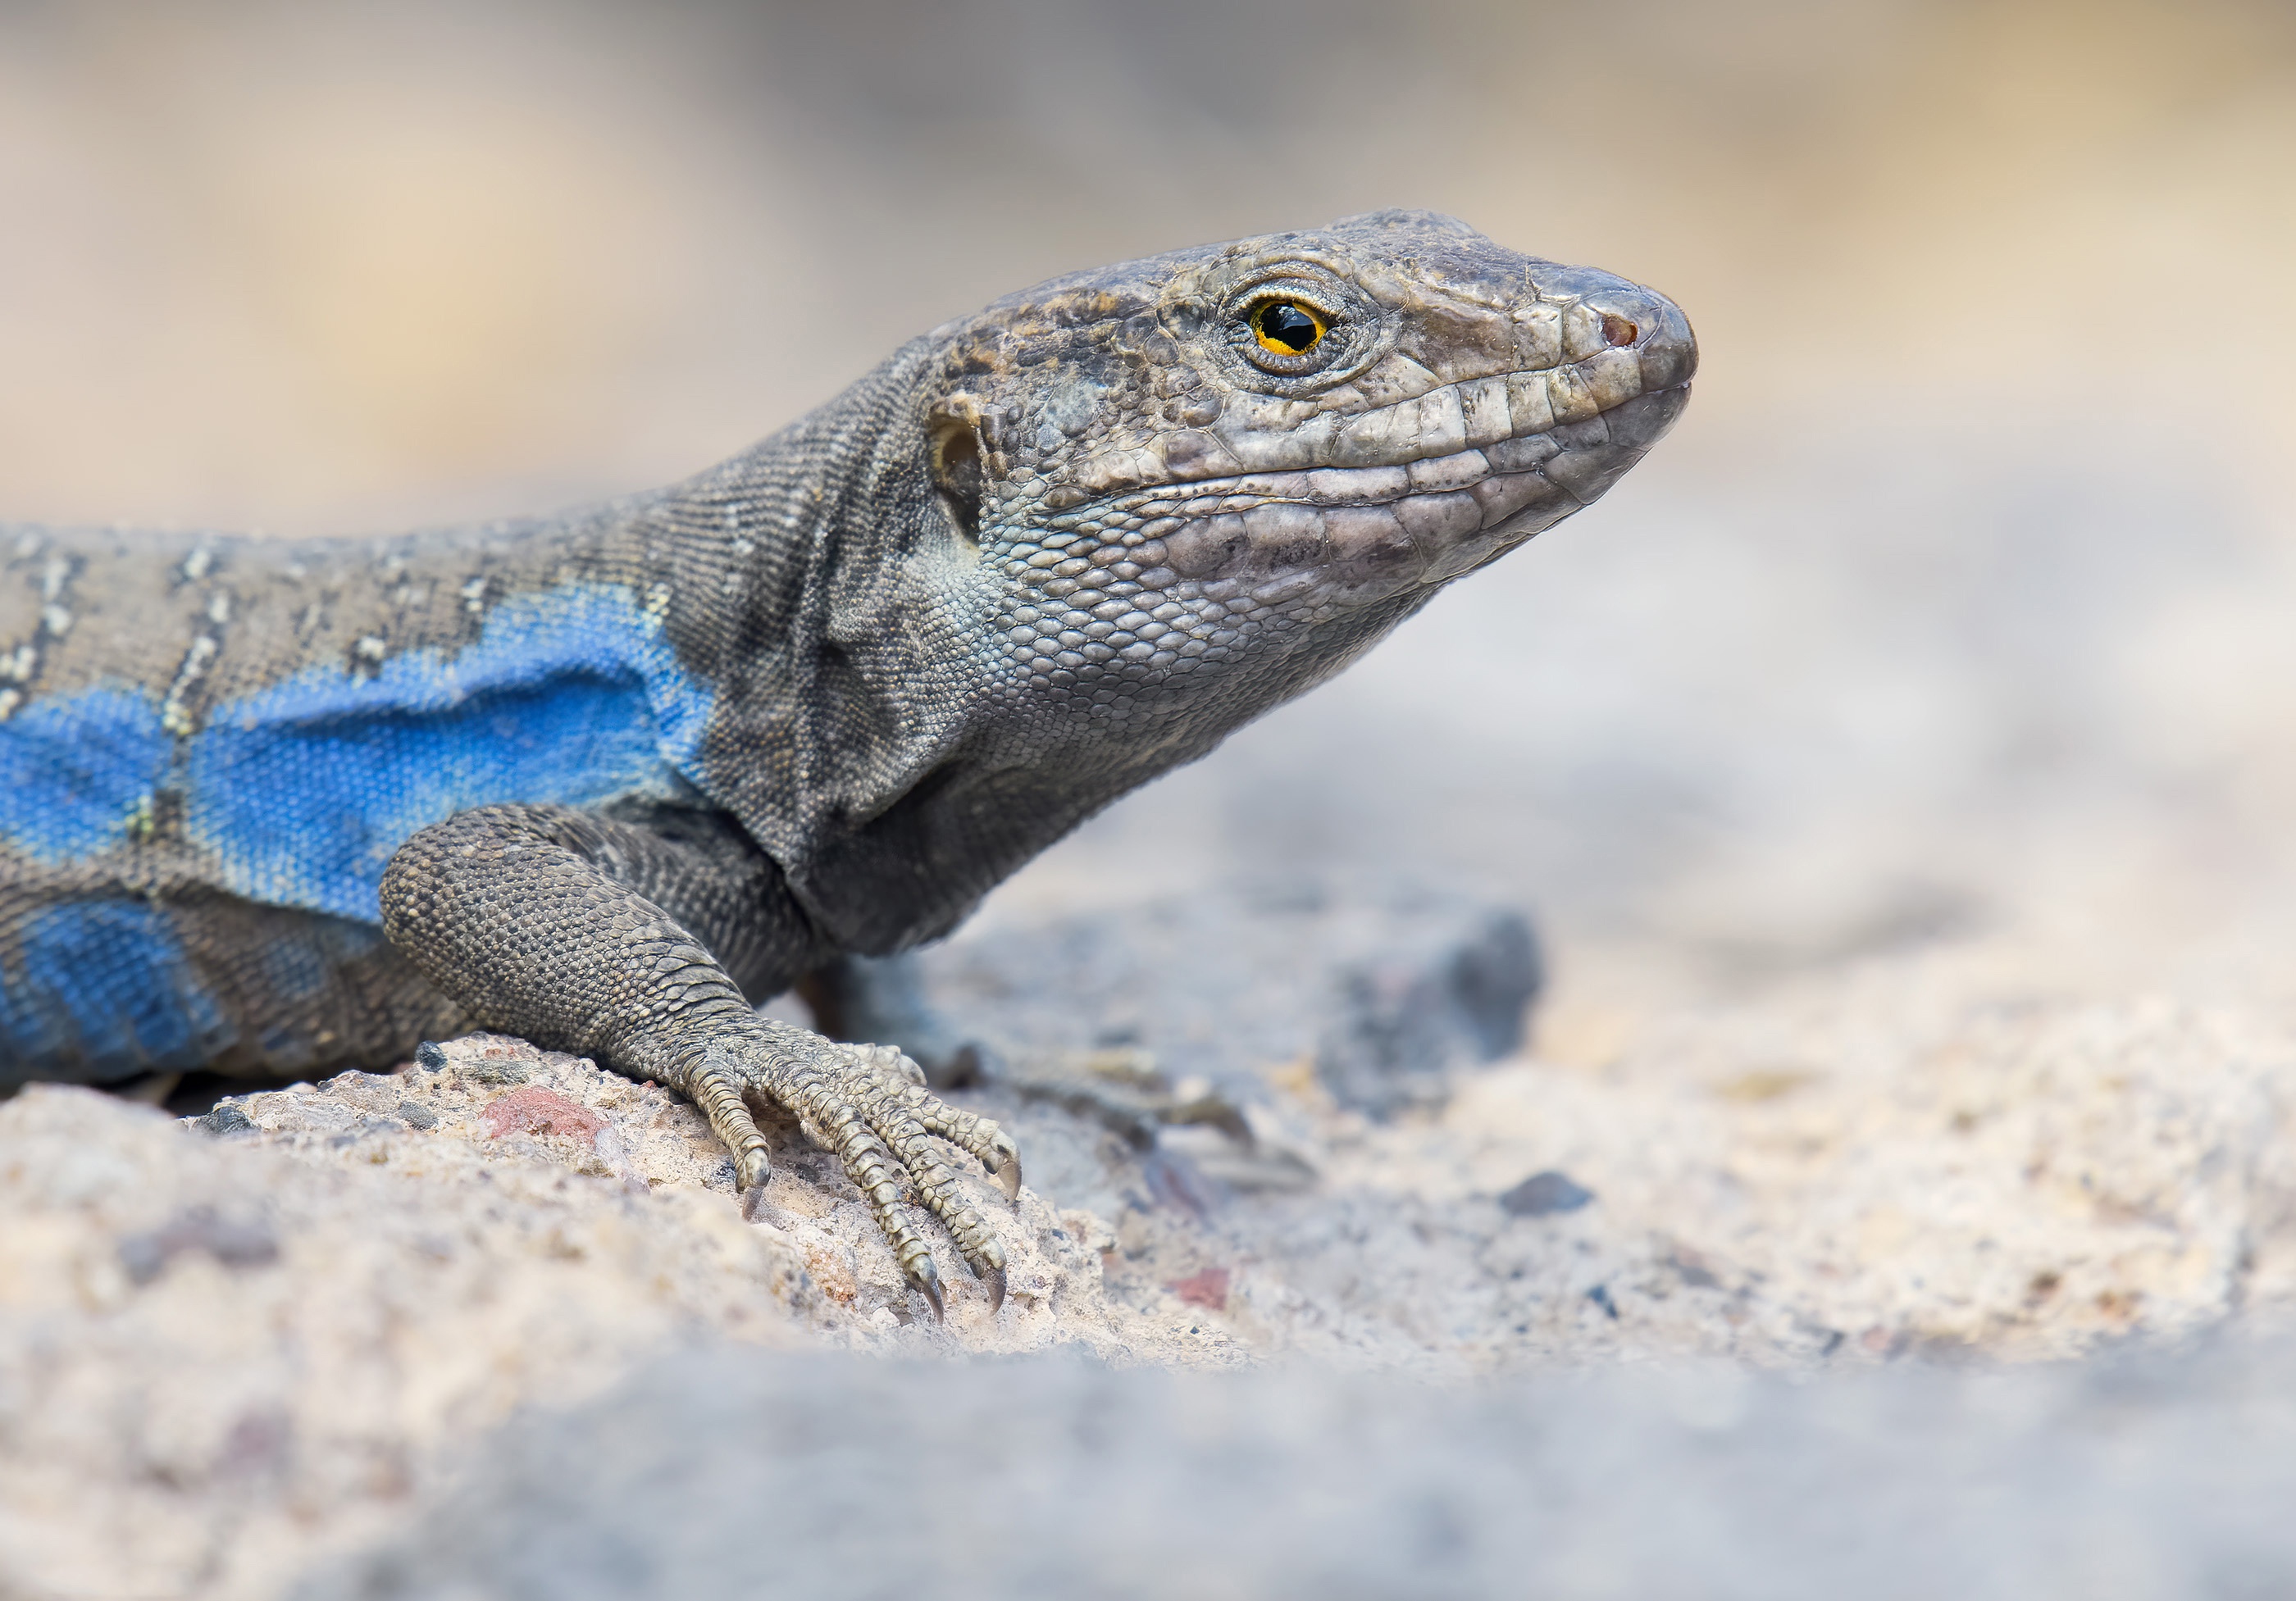 488781 descargar imagen animales, réptil, lagarto, reptiles: fondos de pantalla y protectores de pantalla gratis